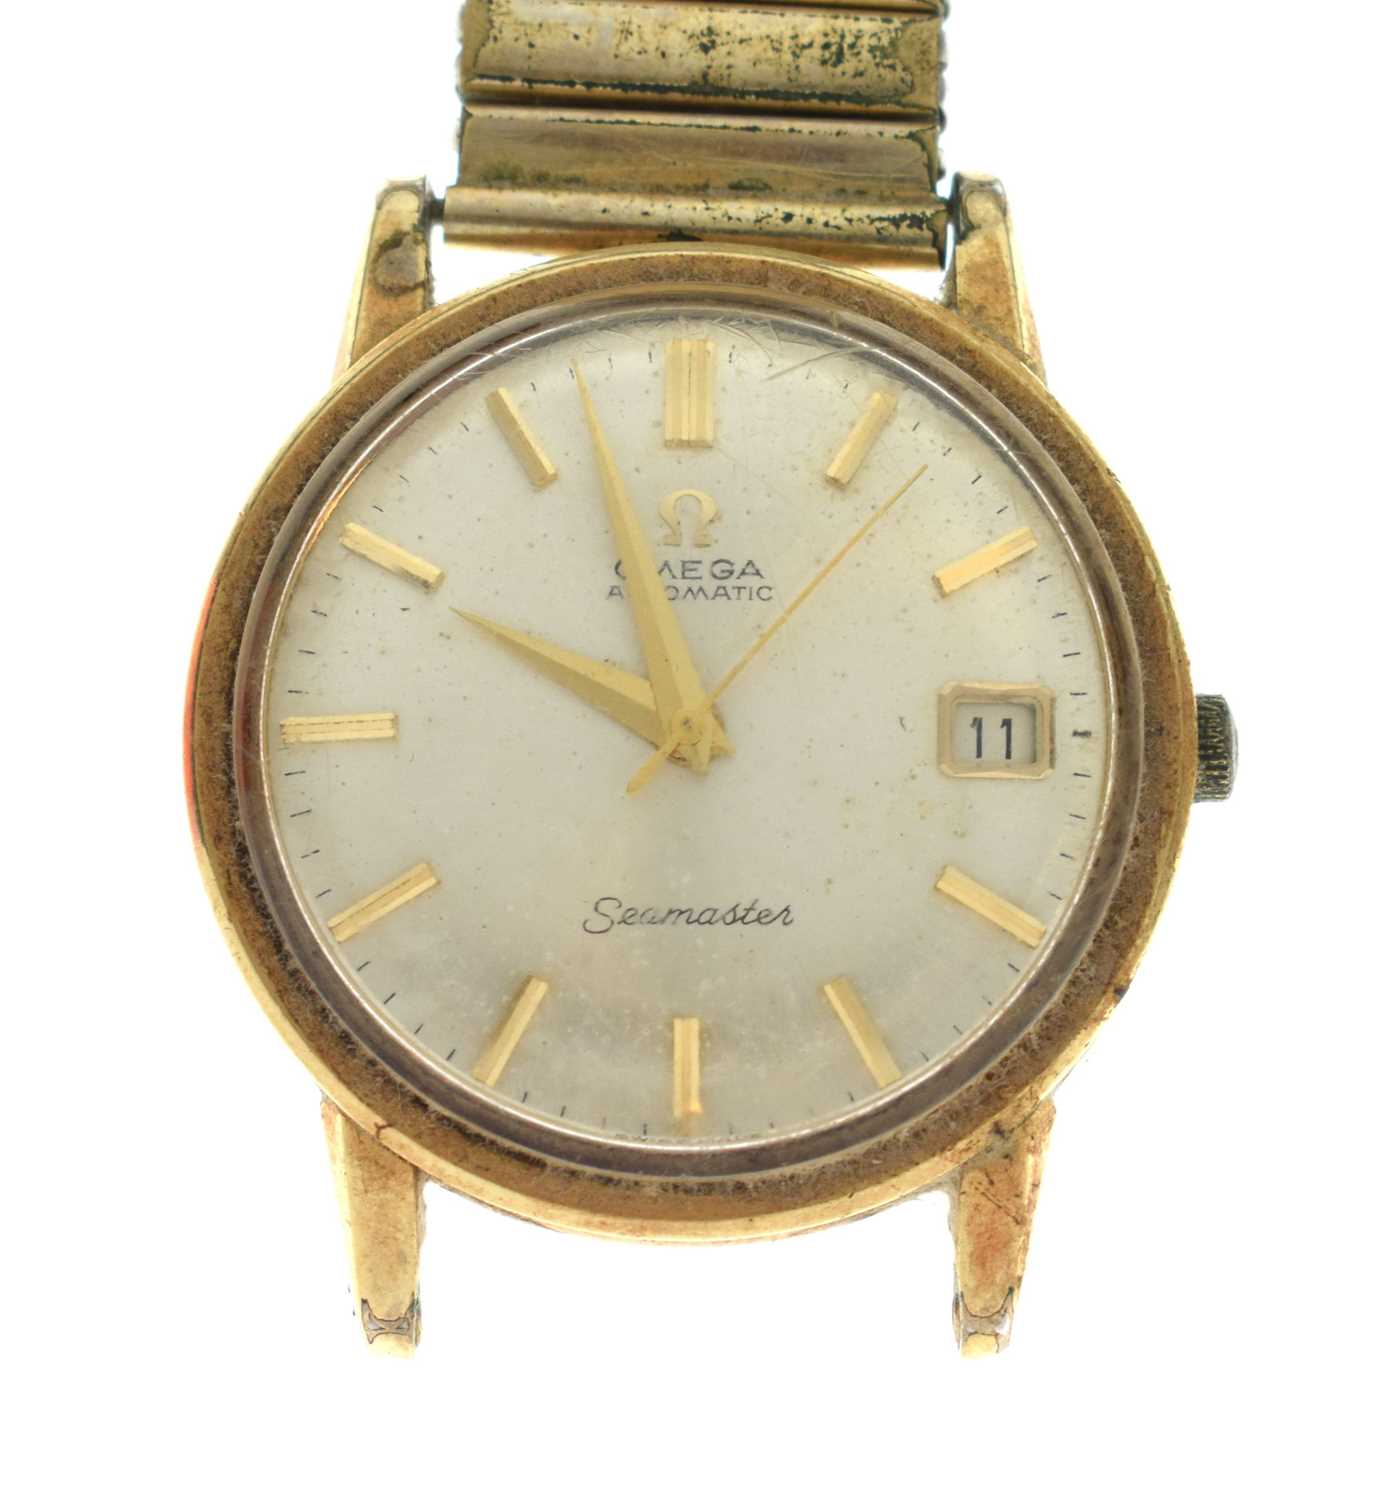 Omega - Gentleman's Seamaster gold plated bracelet watch